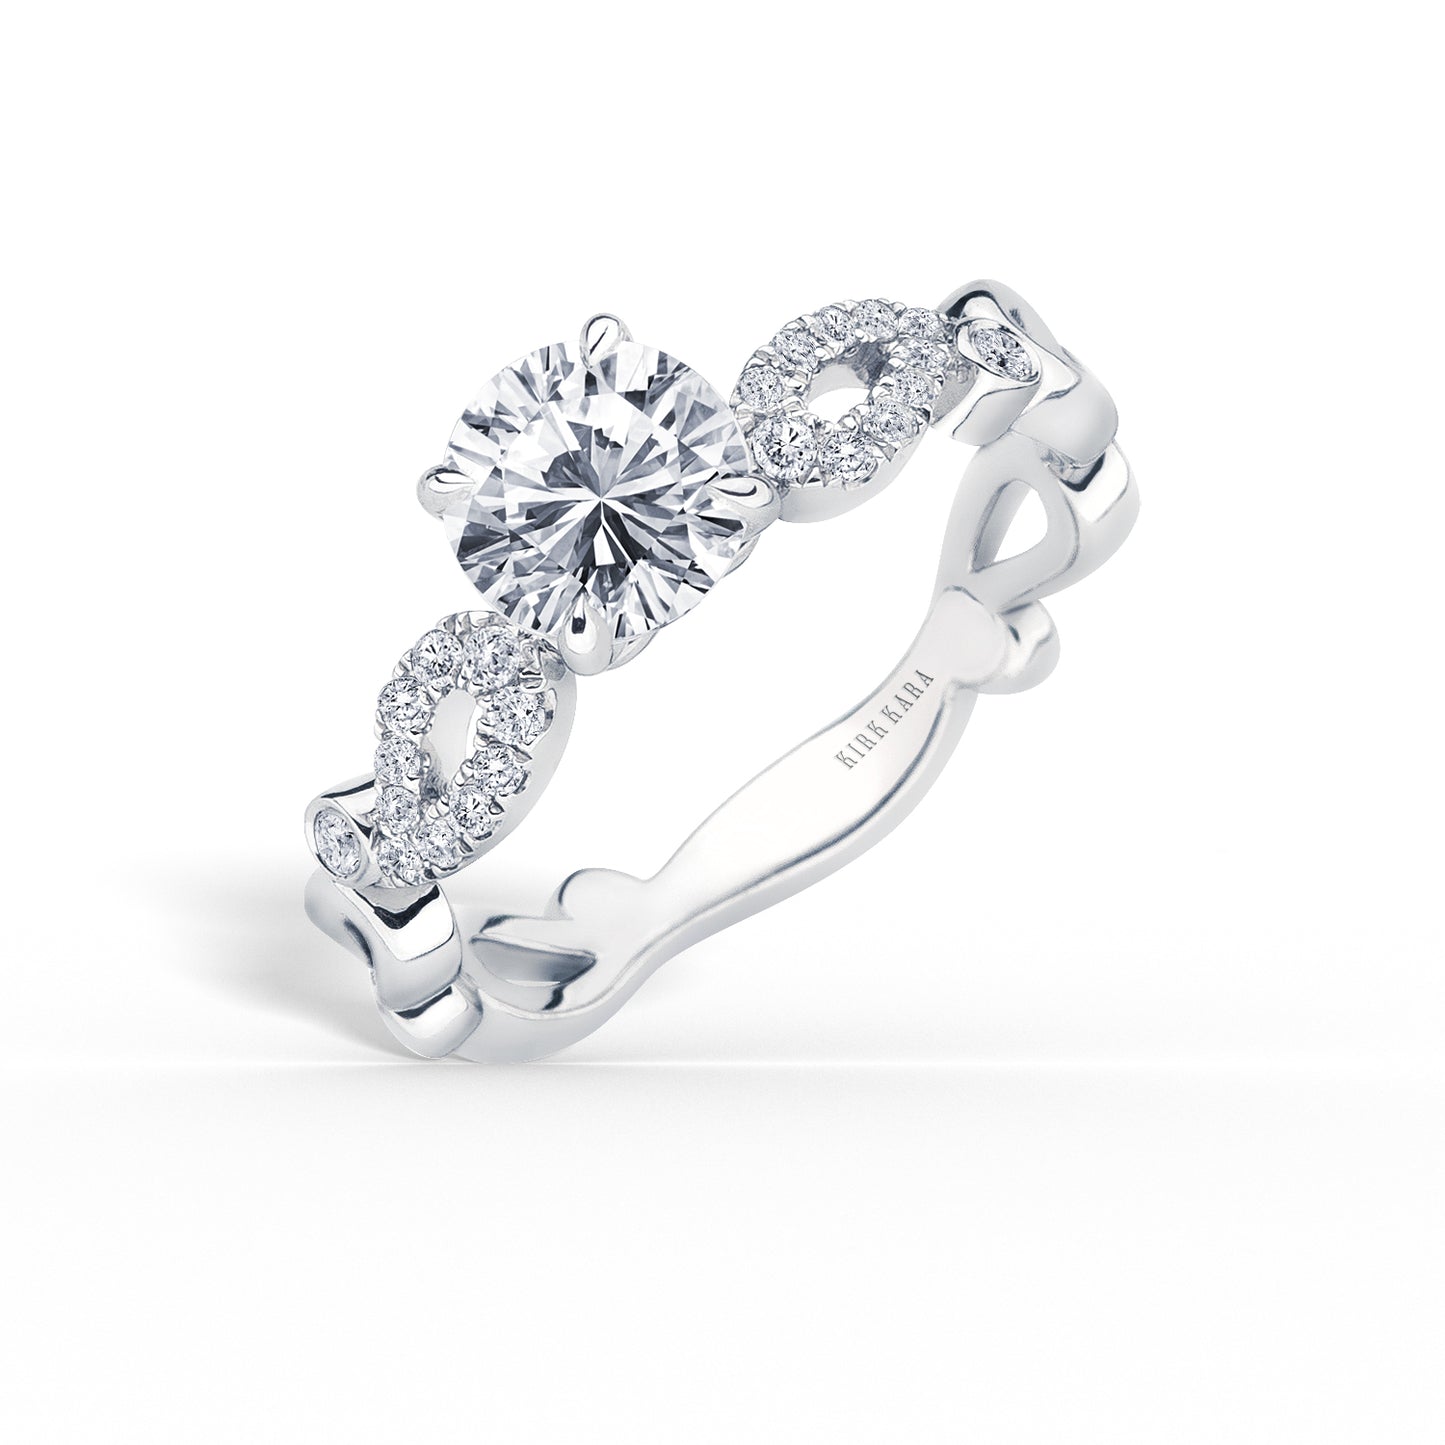 Vintage Inspired Crown Romantic Diamond Engagement Ring